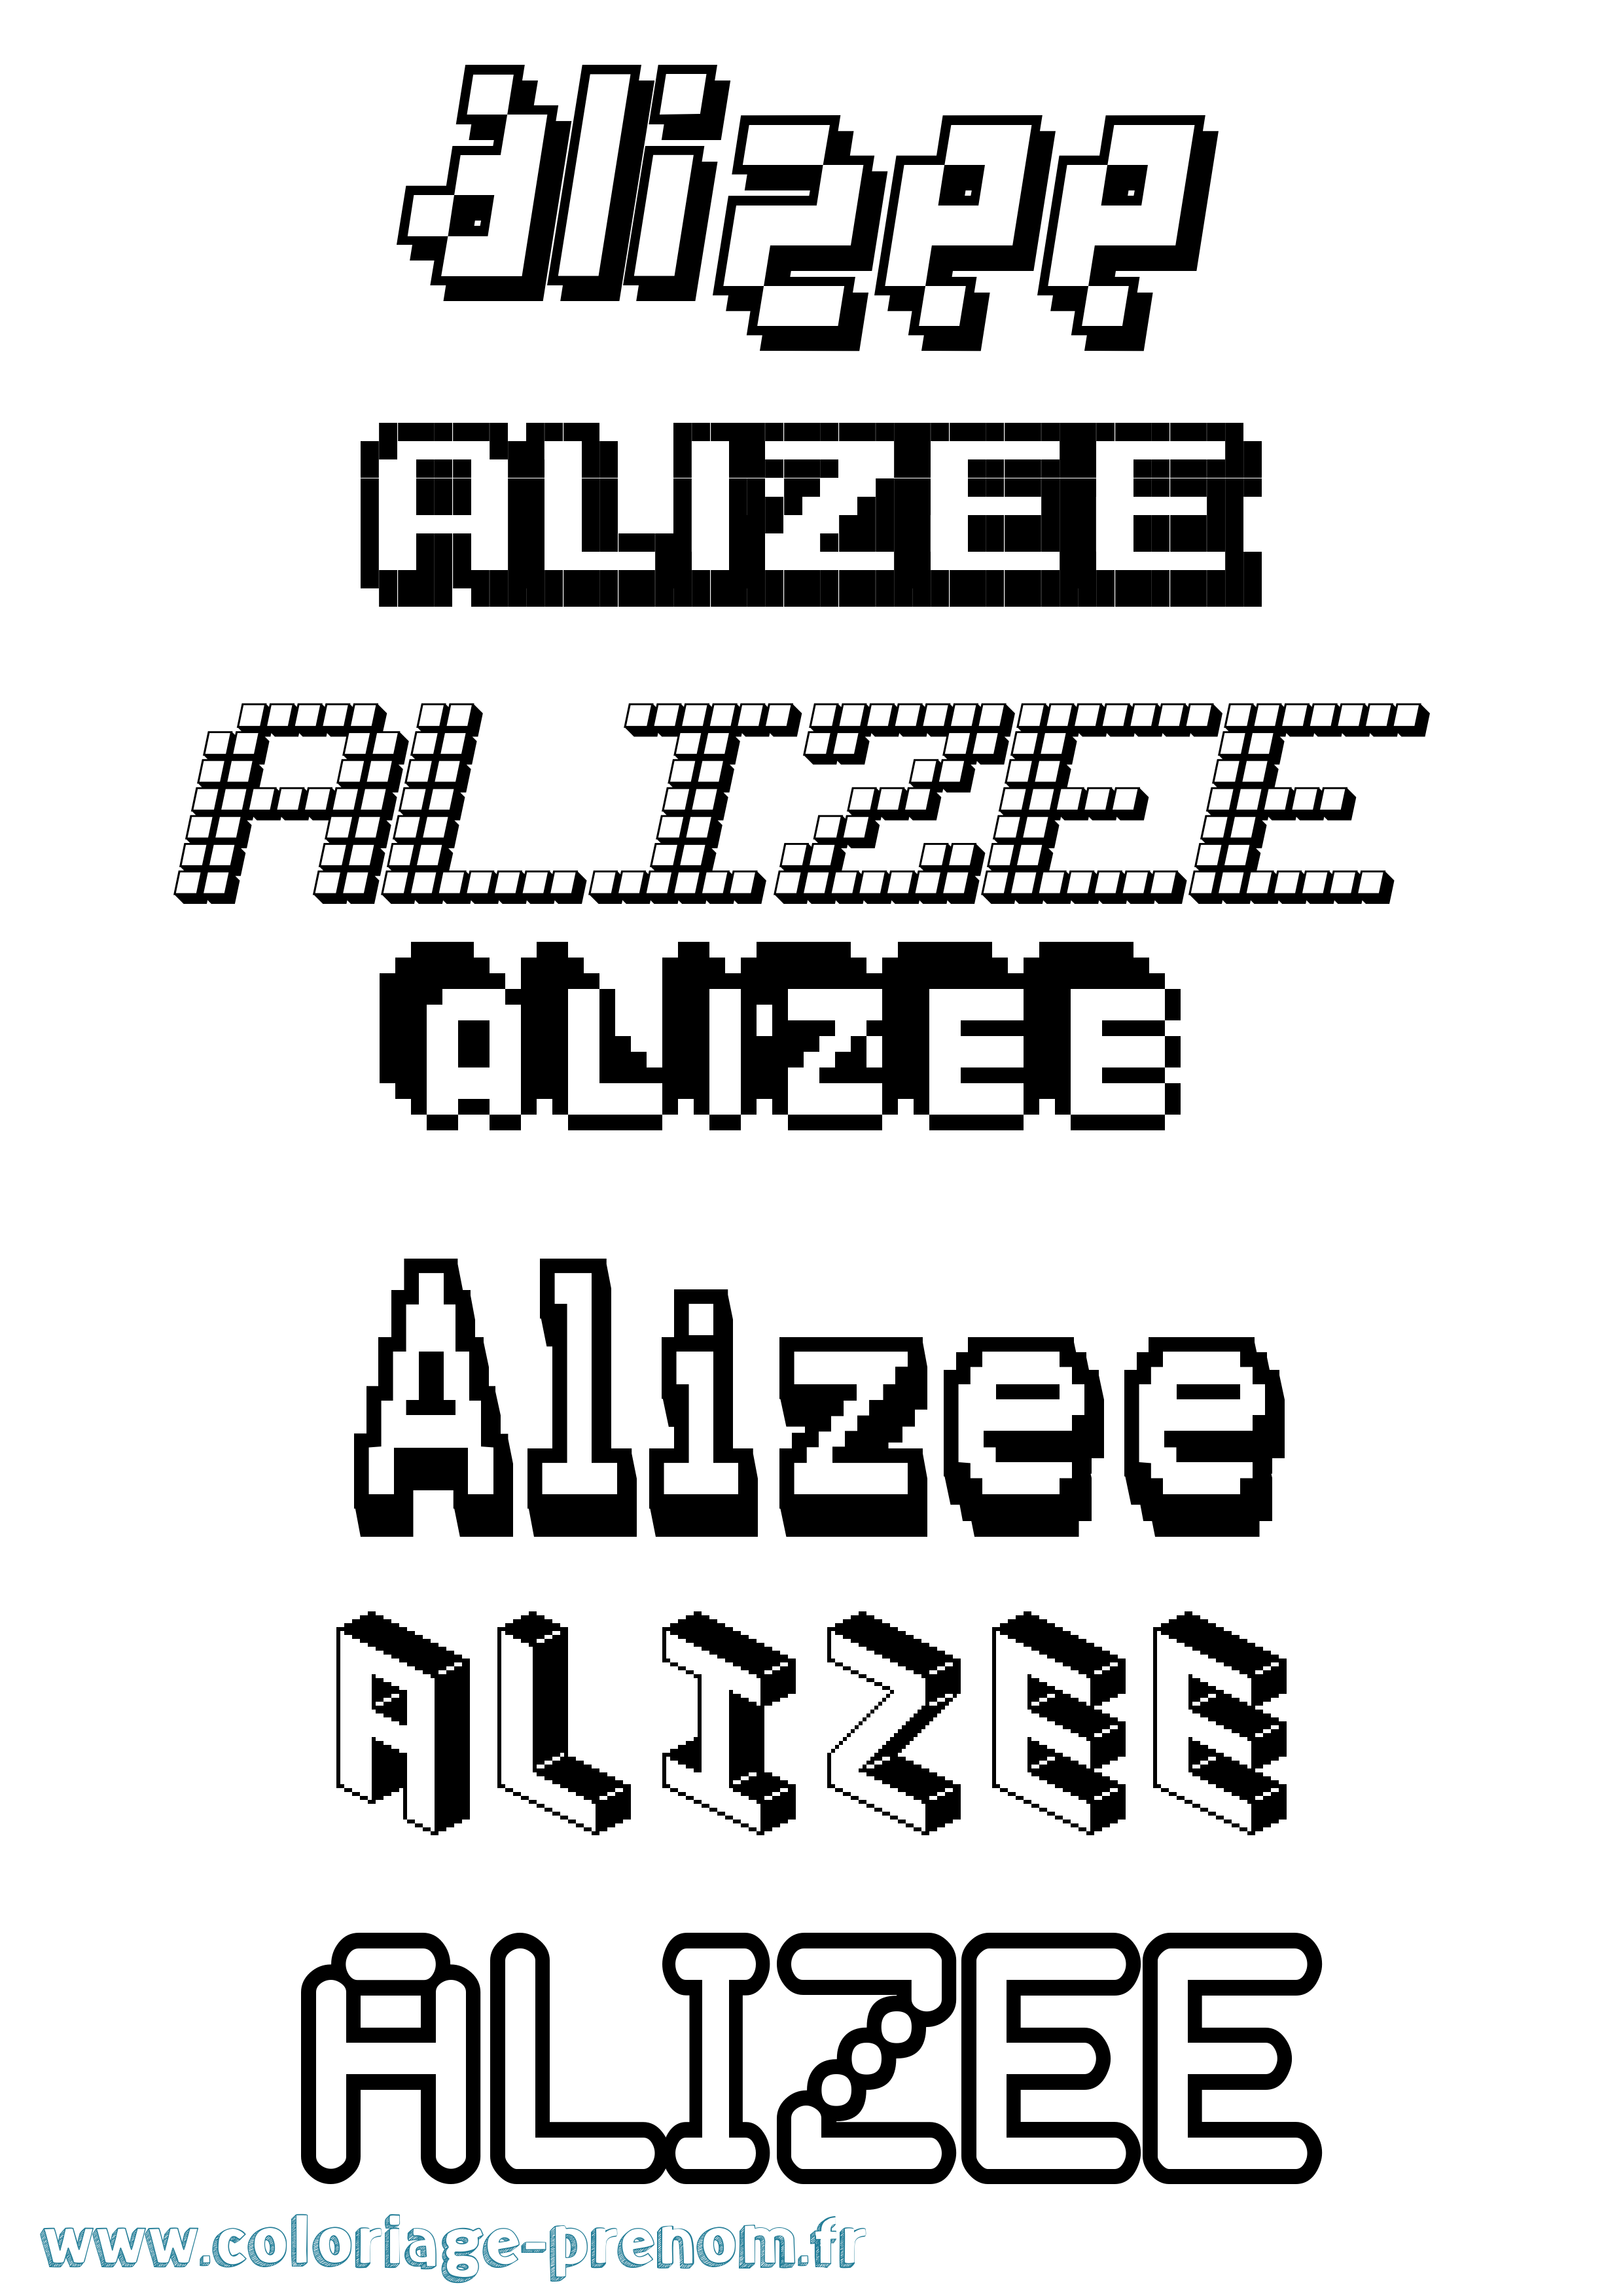 Coloriage prénom Alizee Pixel